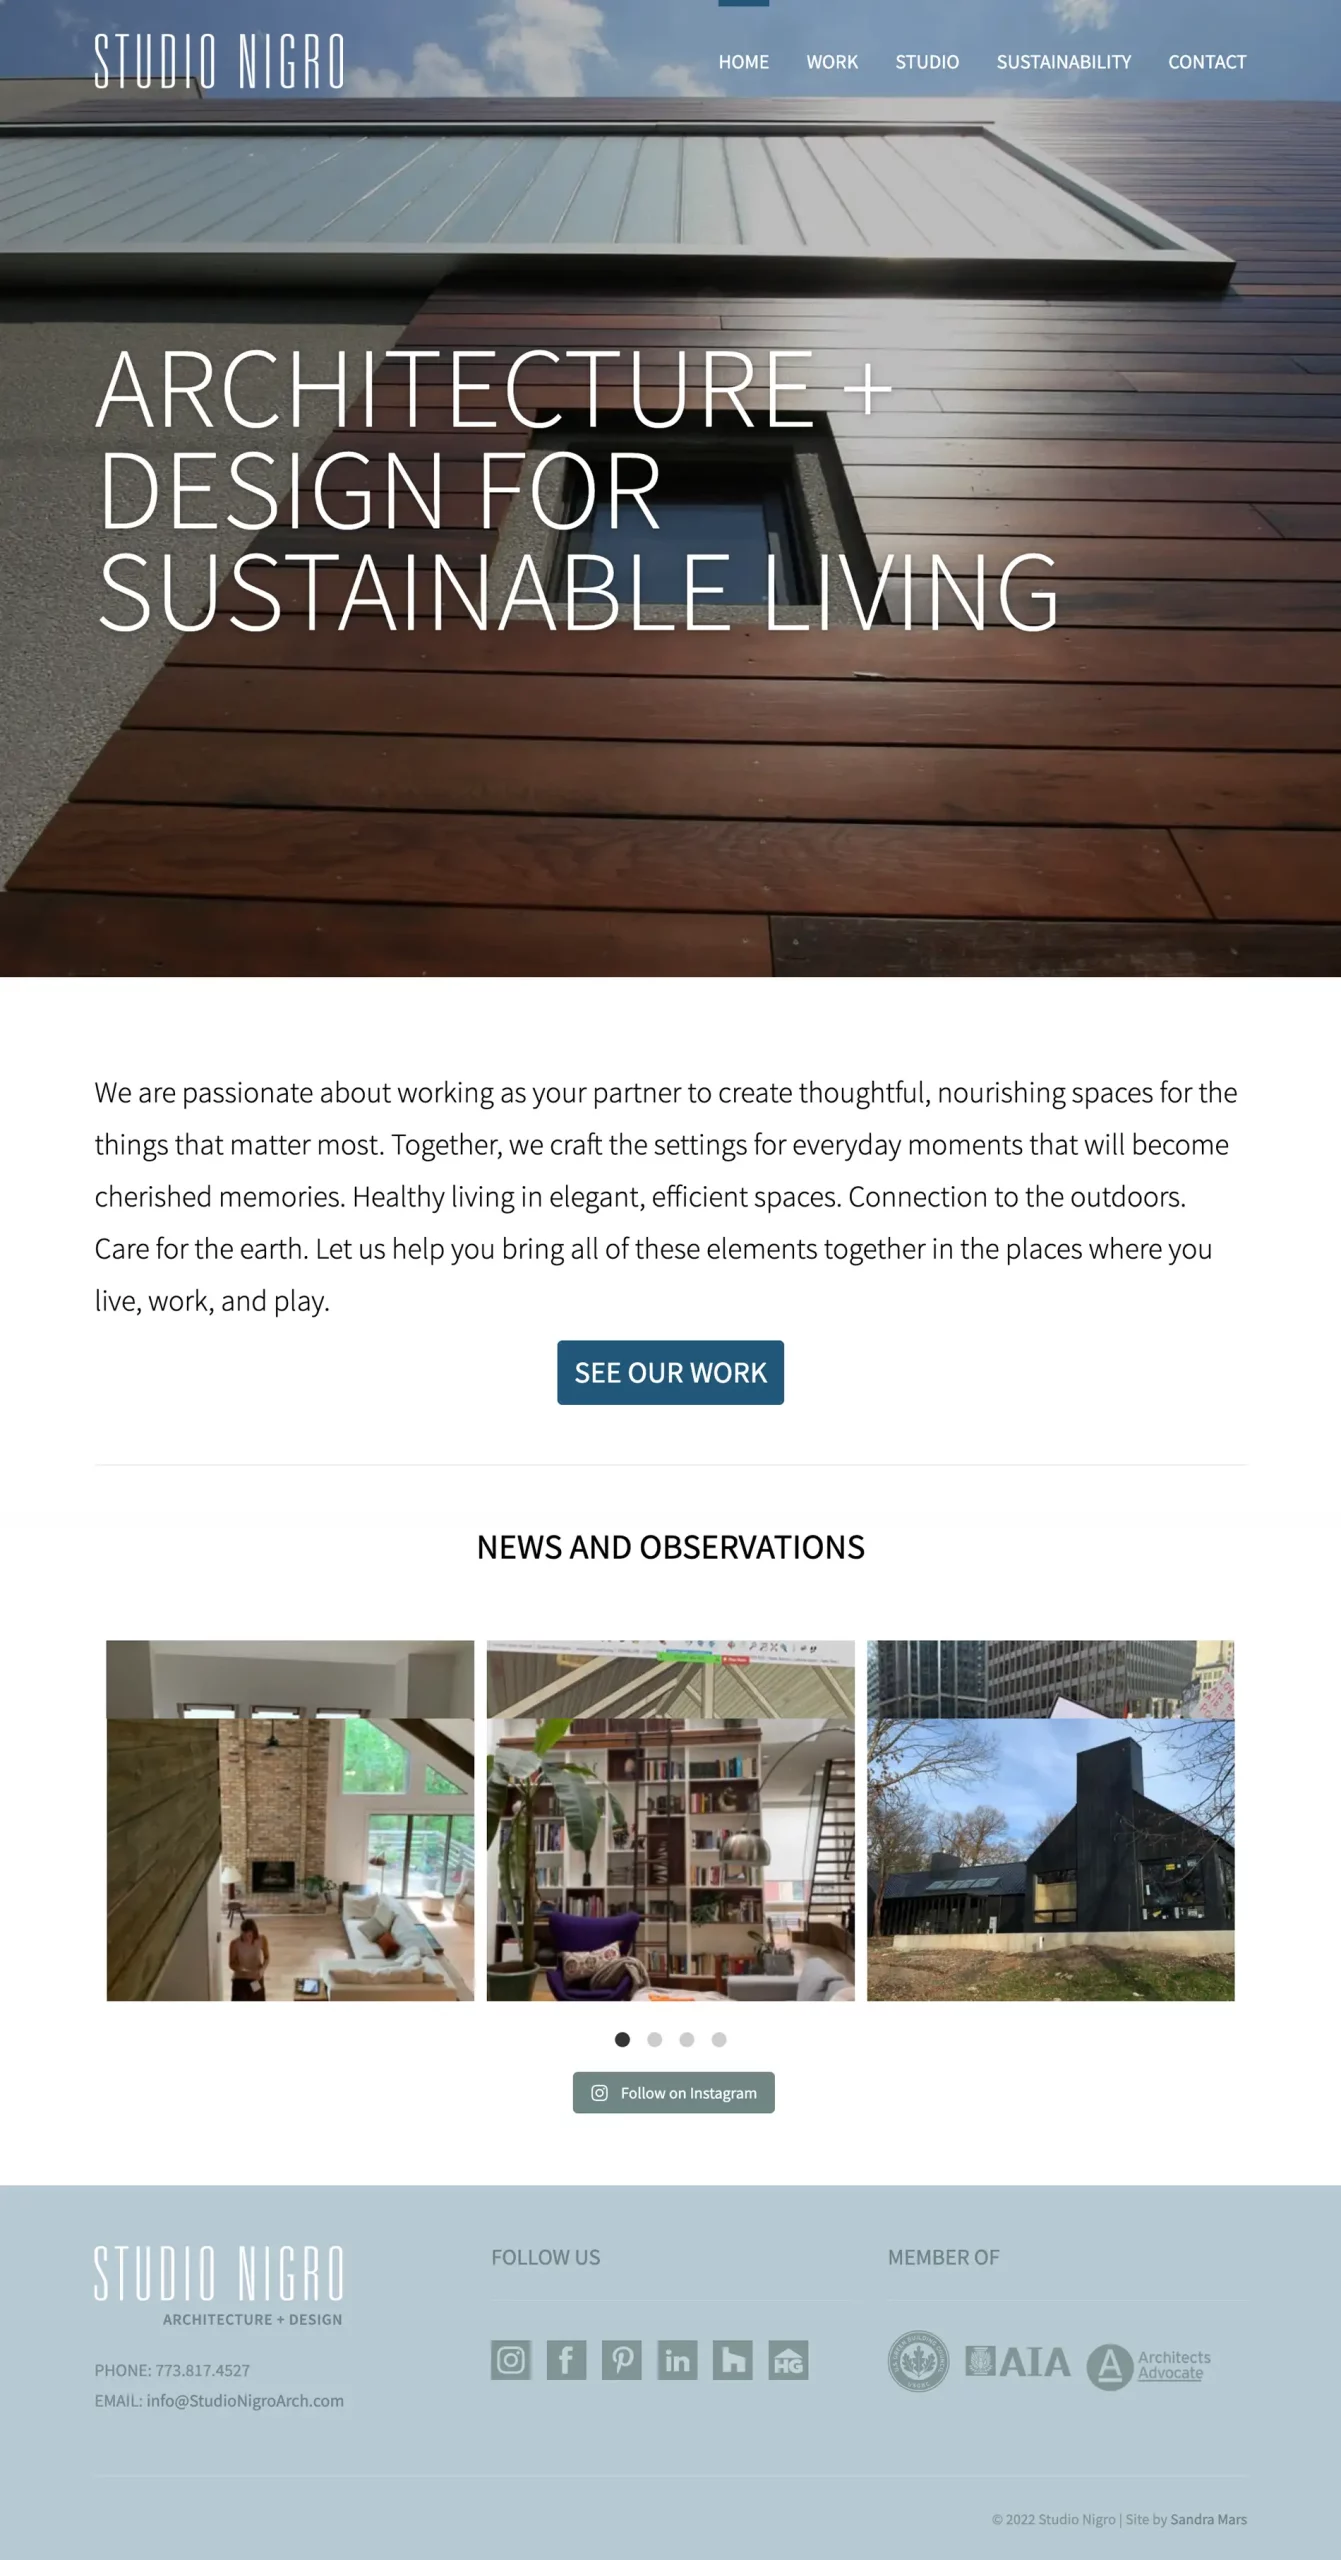 Studio Nigro Architecture homepage image